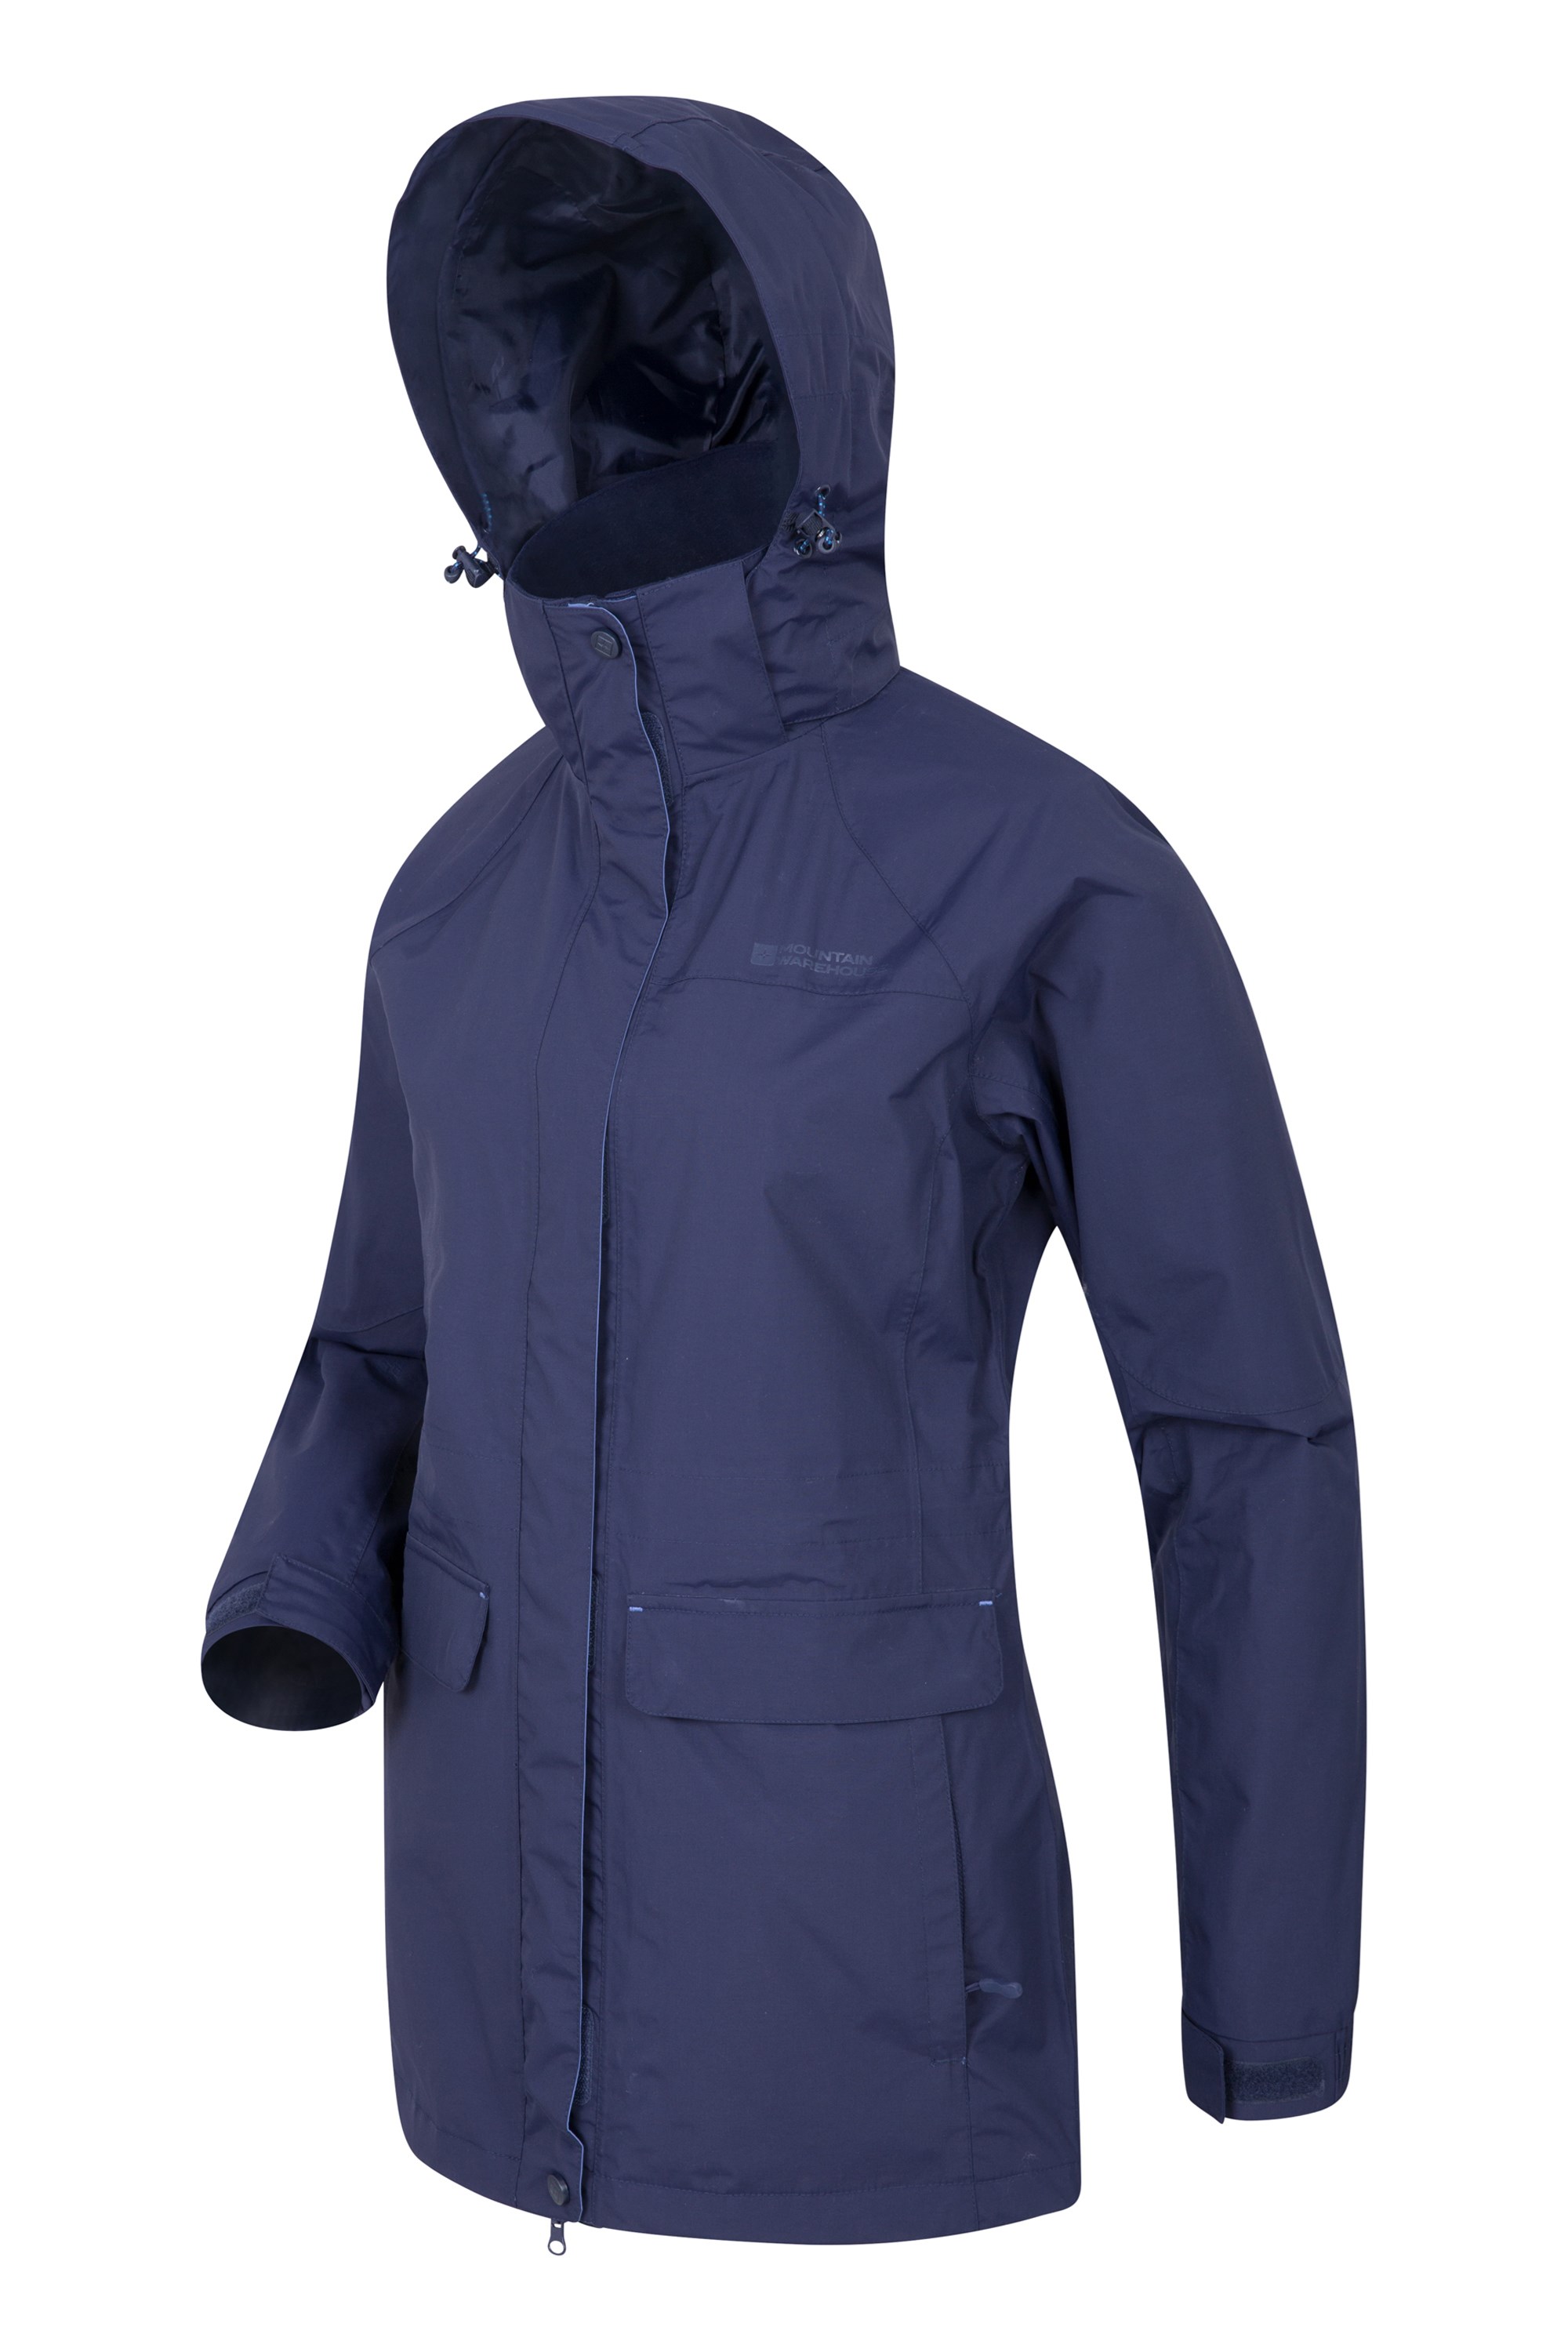 Detachable Hood Trench Coat Taped Seams Rain Coat Mountain Warehouse Glacial Womens Waterproof Jacket Breathable Casual Jacket Ideal Ladies Coat for Walking 